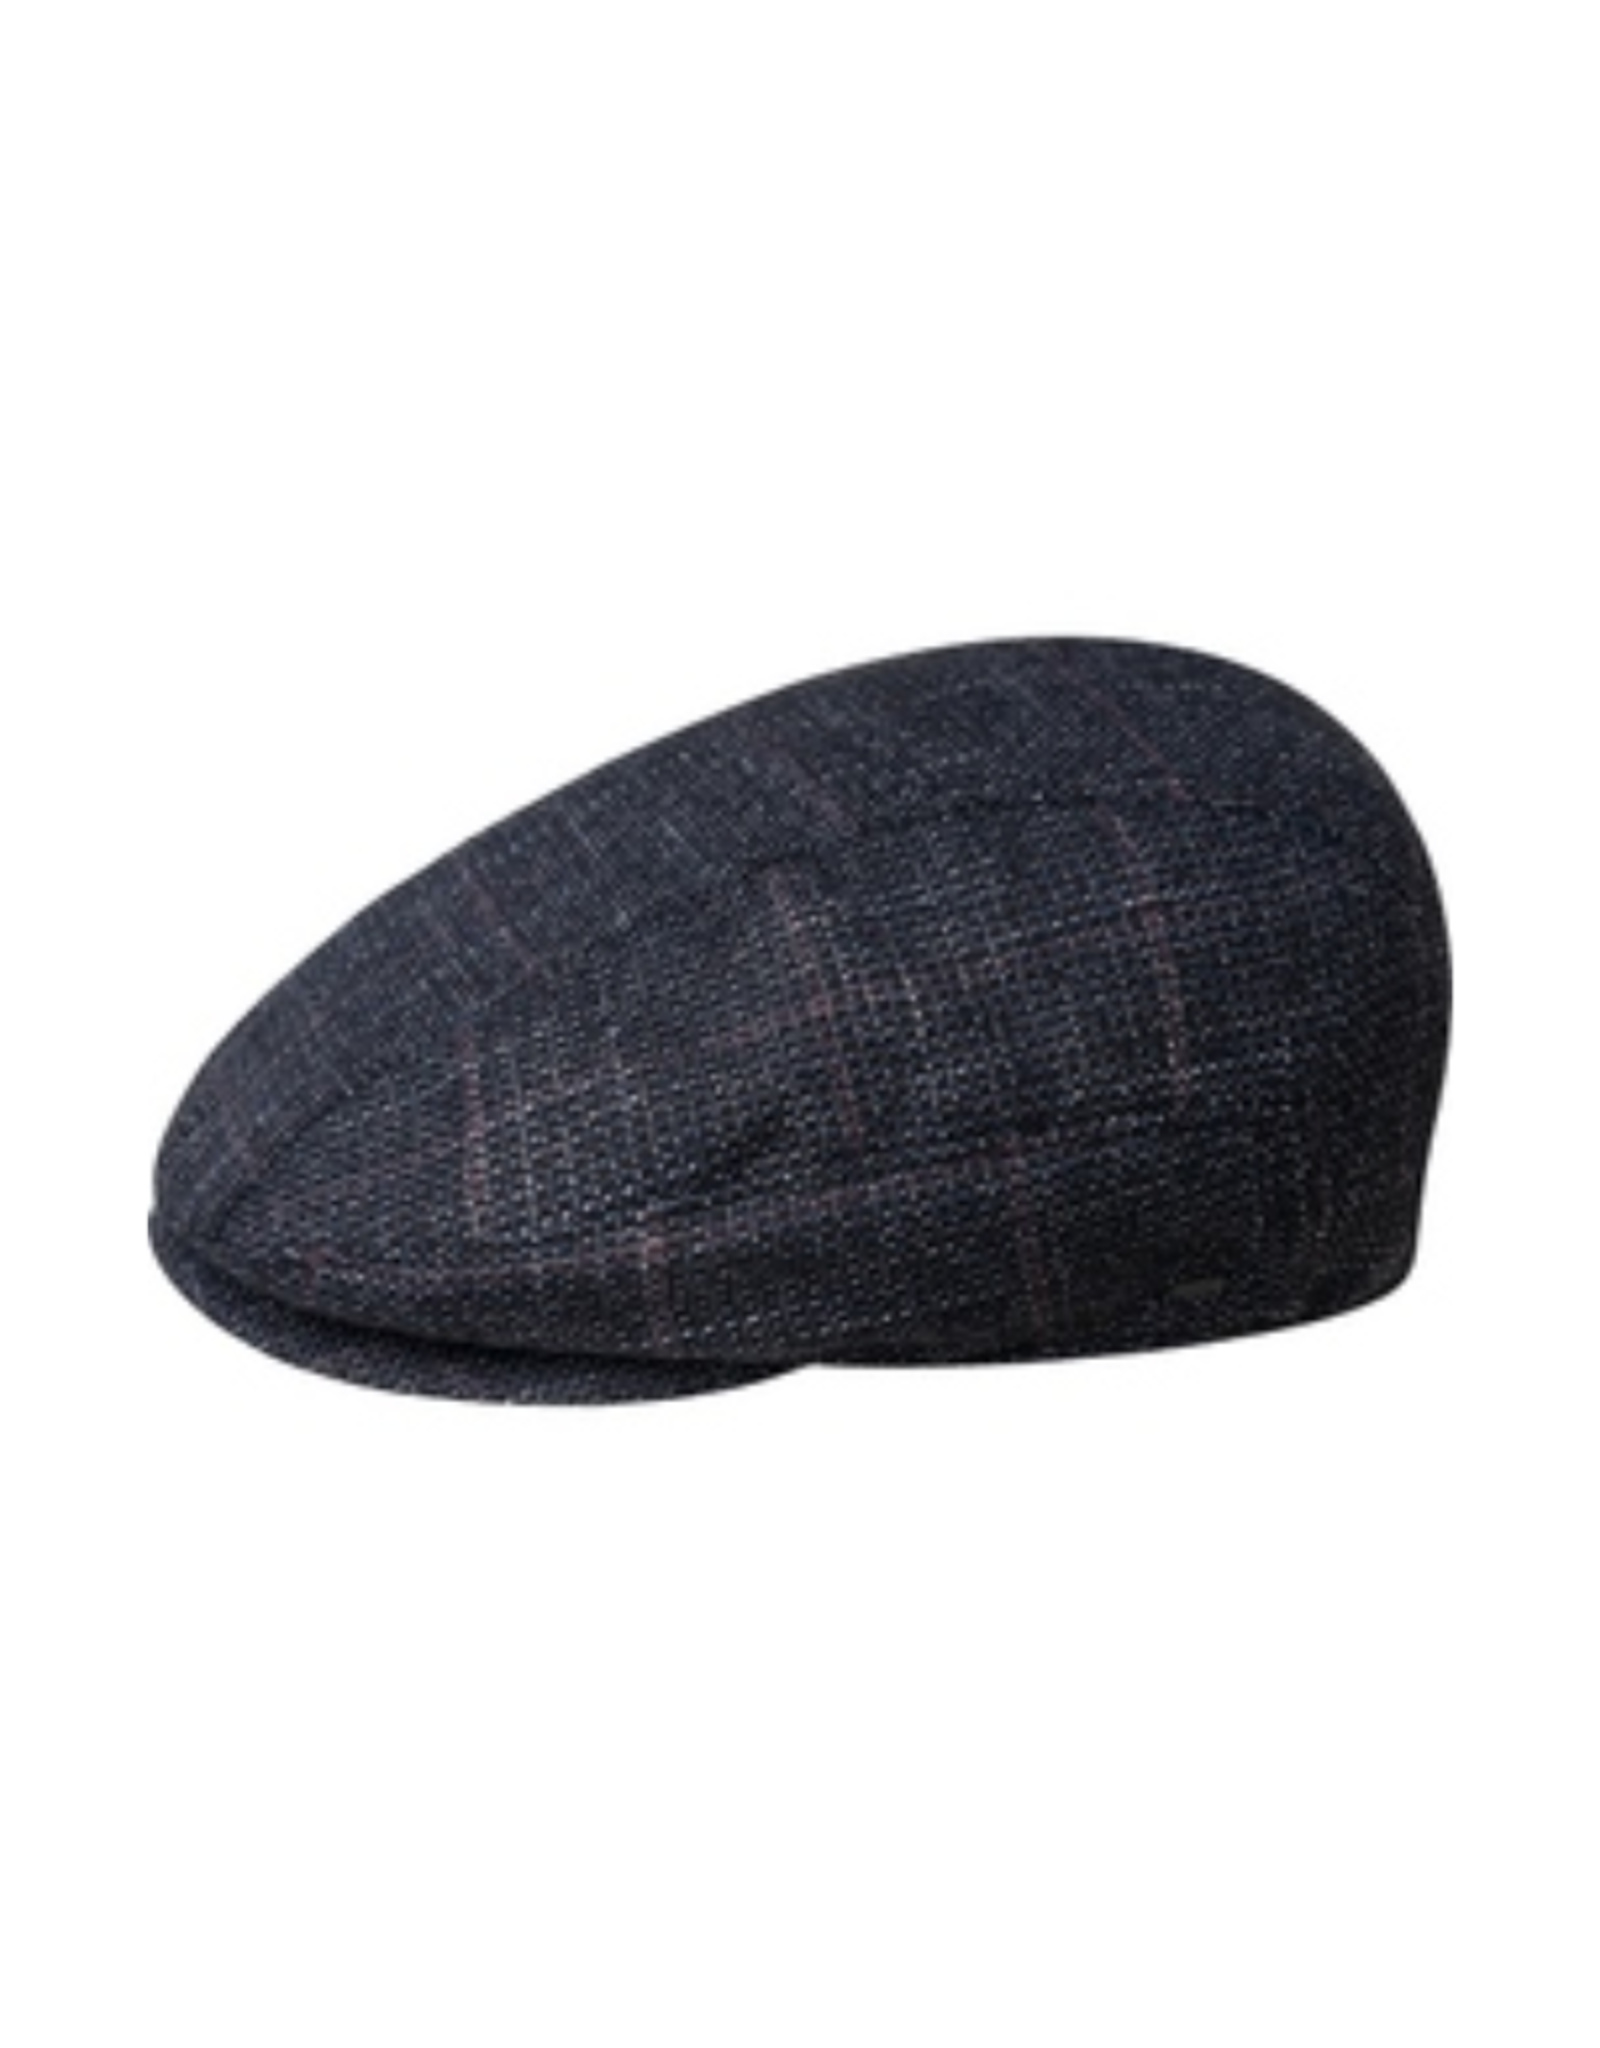 Bailey Hat Co. HAT-IVY CAP "DERIN"